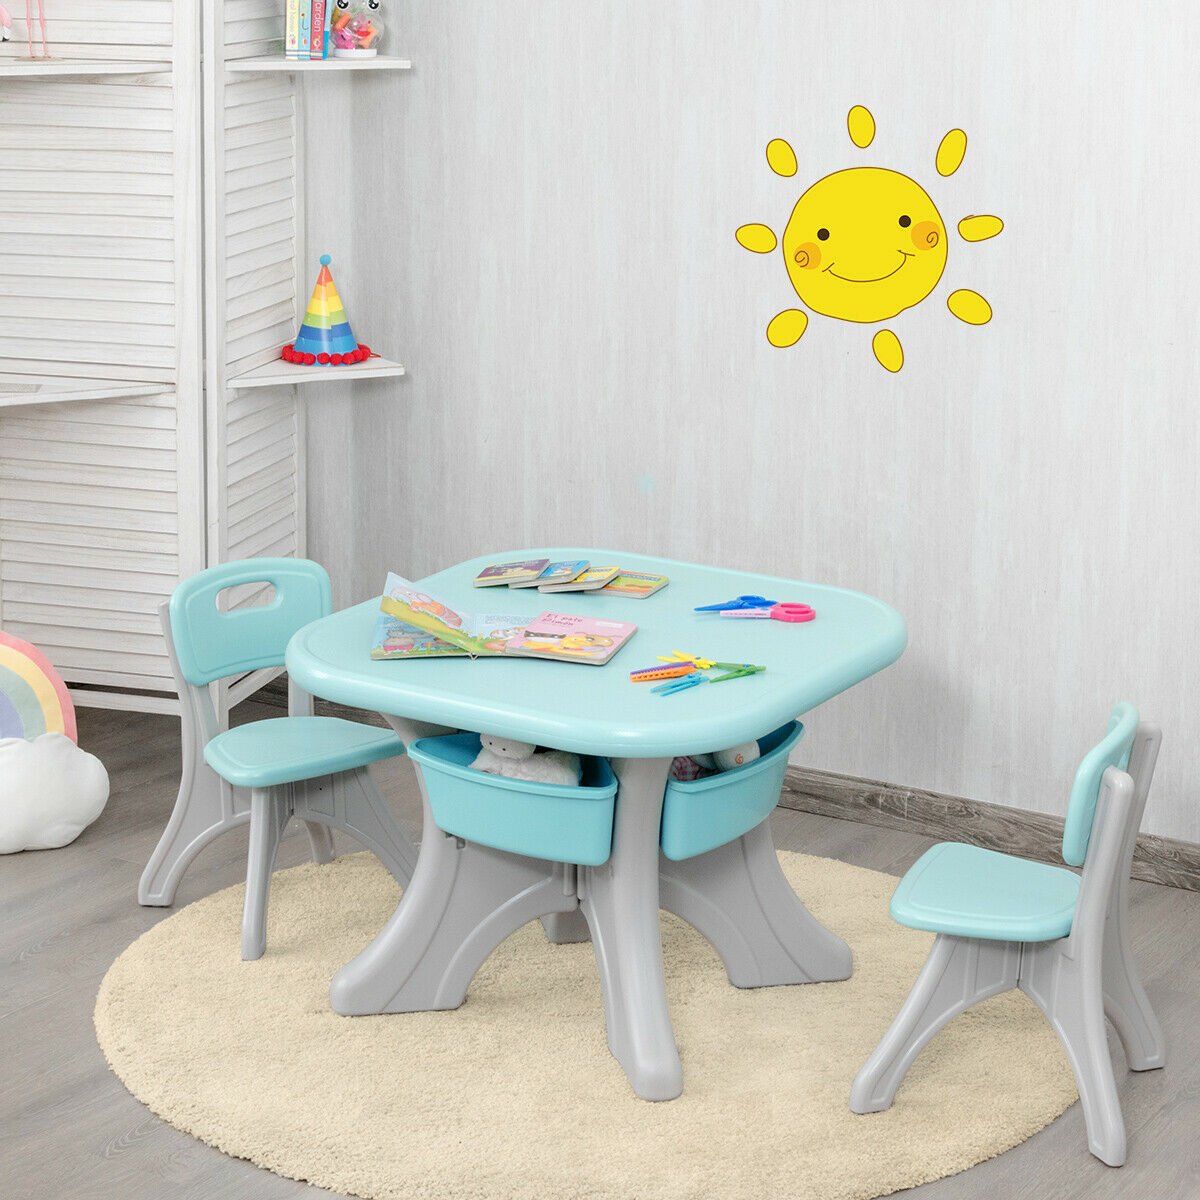 Children Kids Activity Table & Chair Set Play Furniture W/Storage, Blue - Gallery Canada